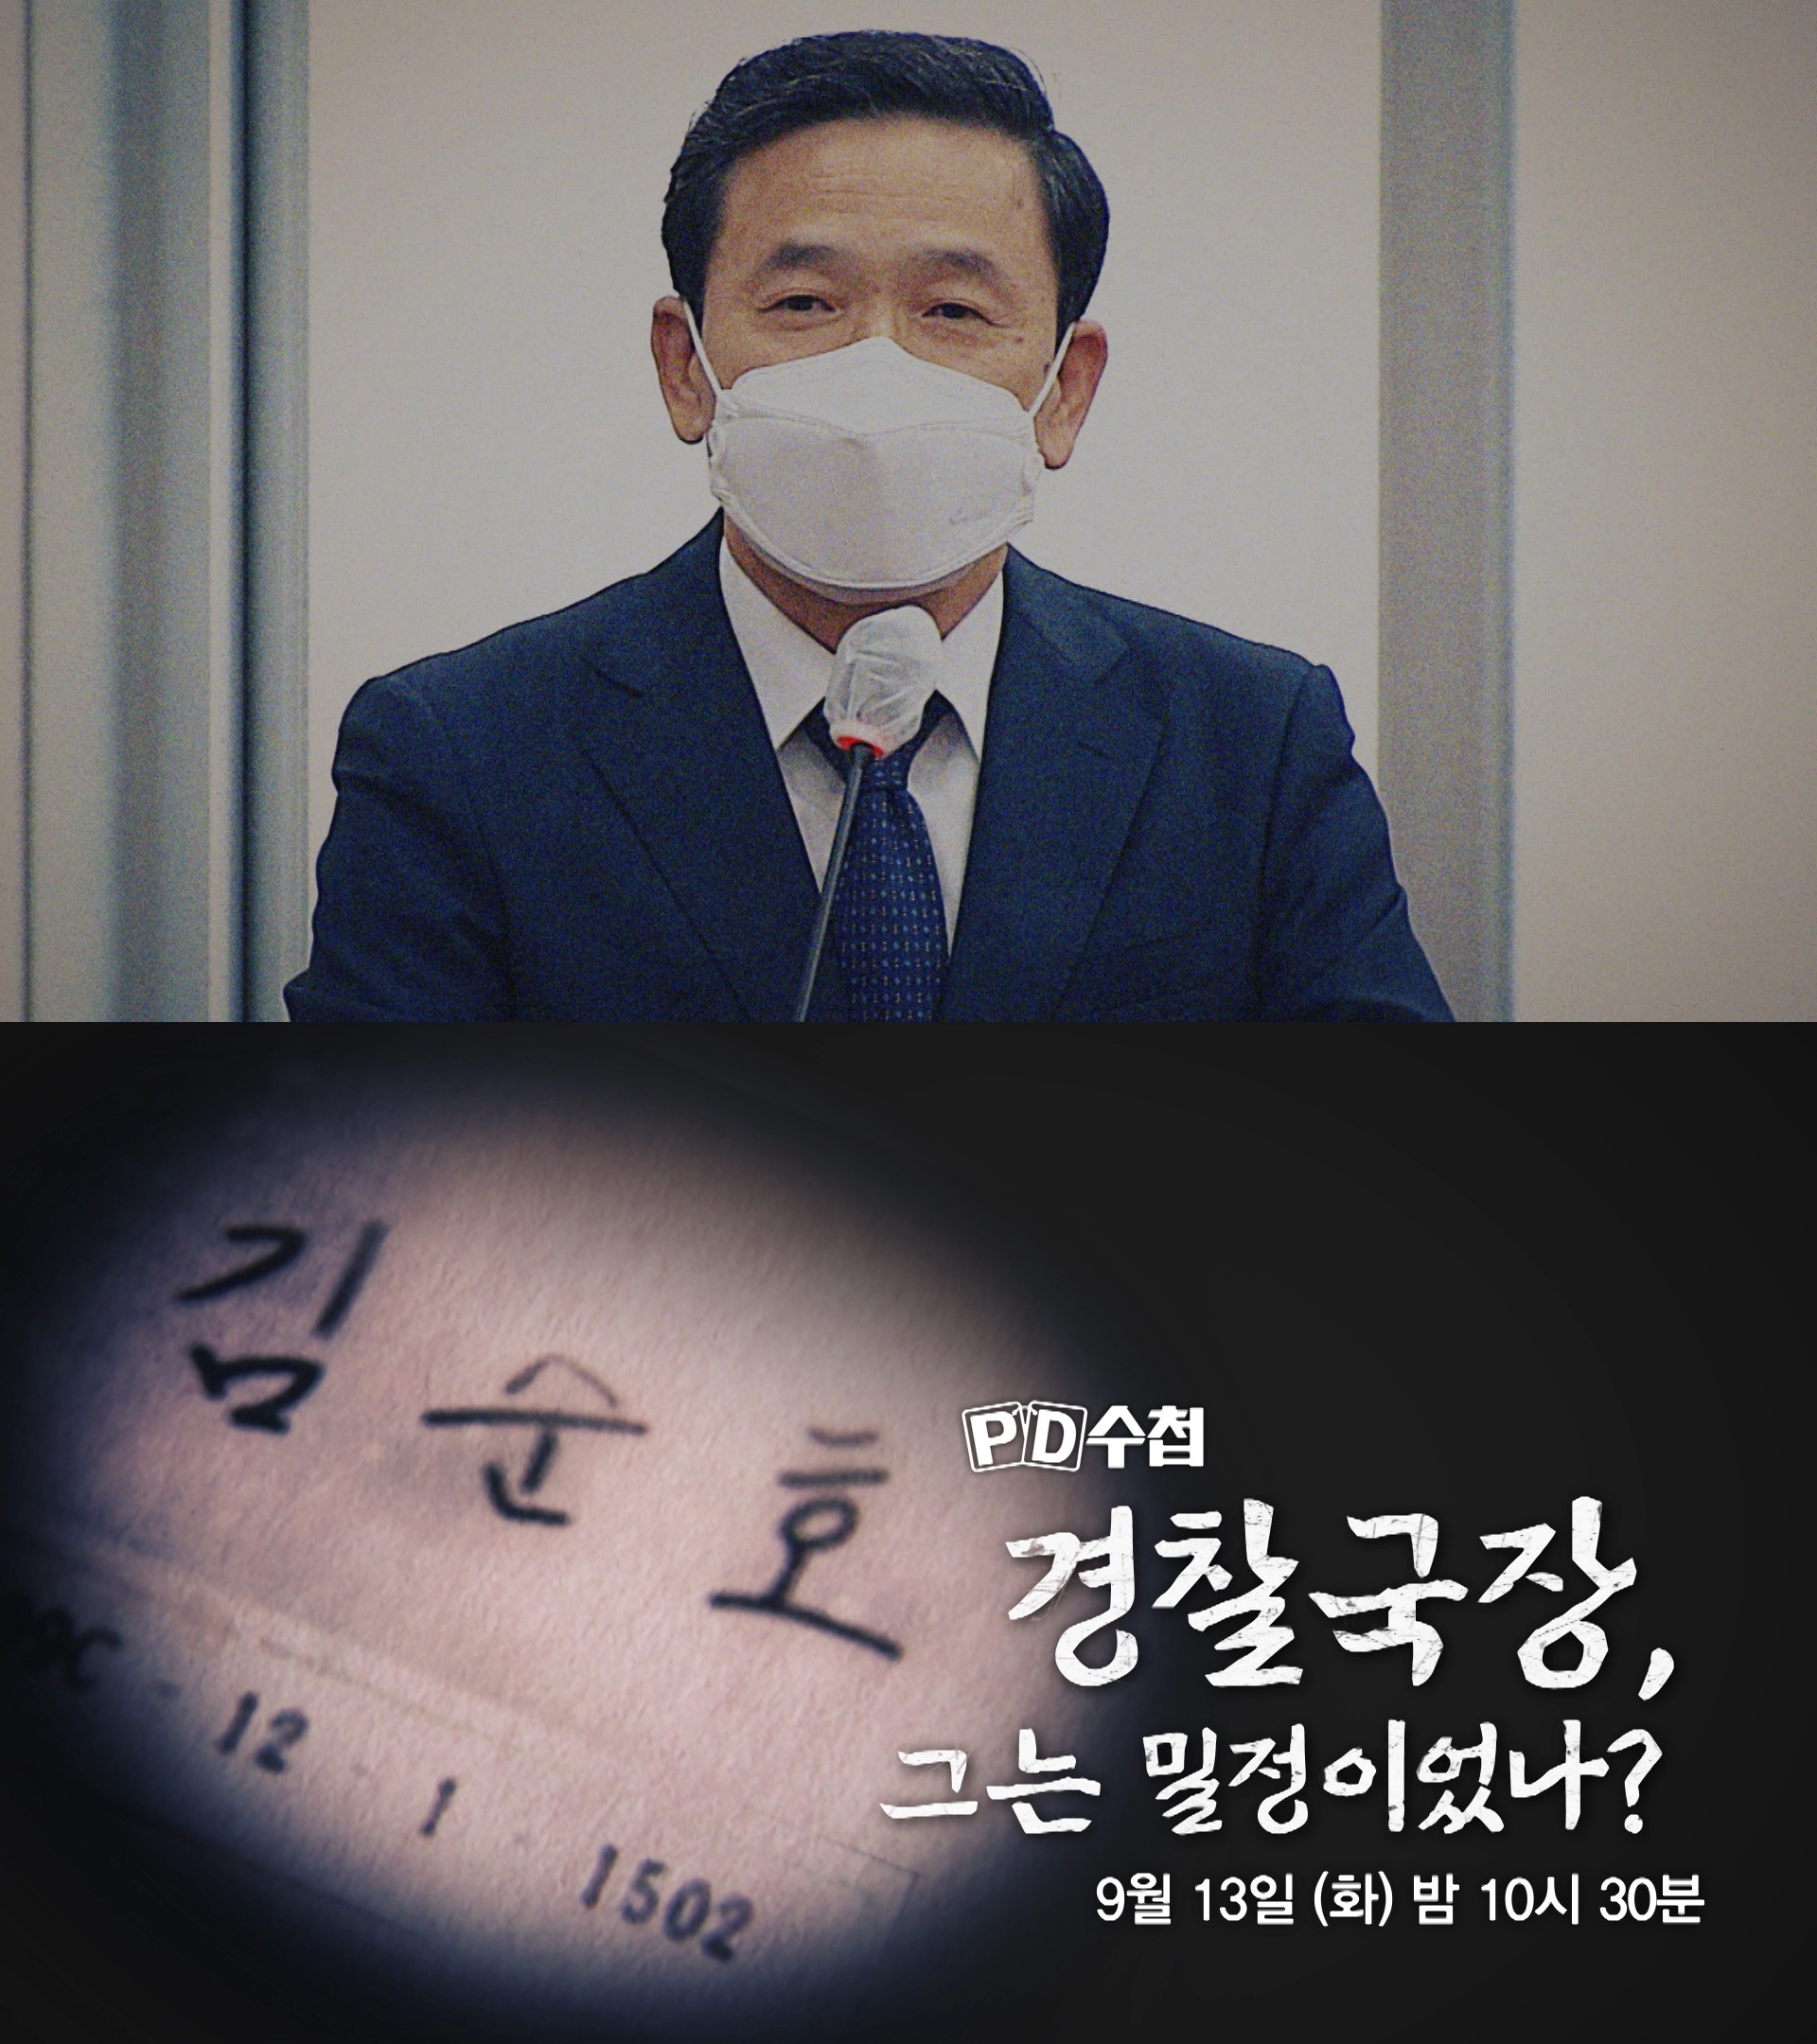 'PD수첩' 초대 행정안전부 경찰국장 밀정 의혹 파헤친다